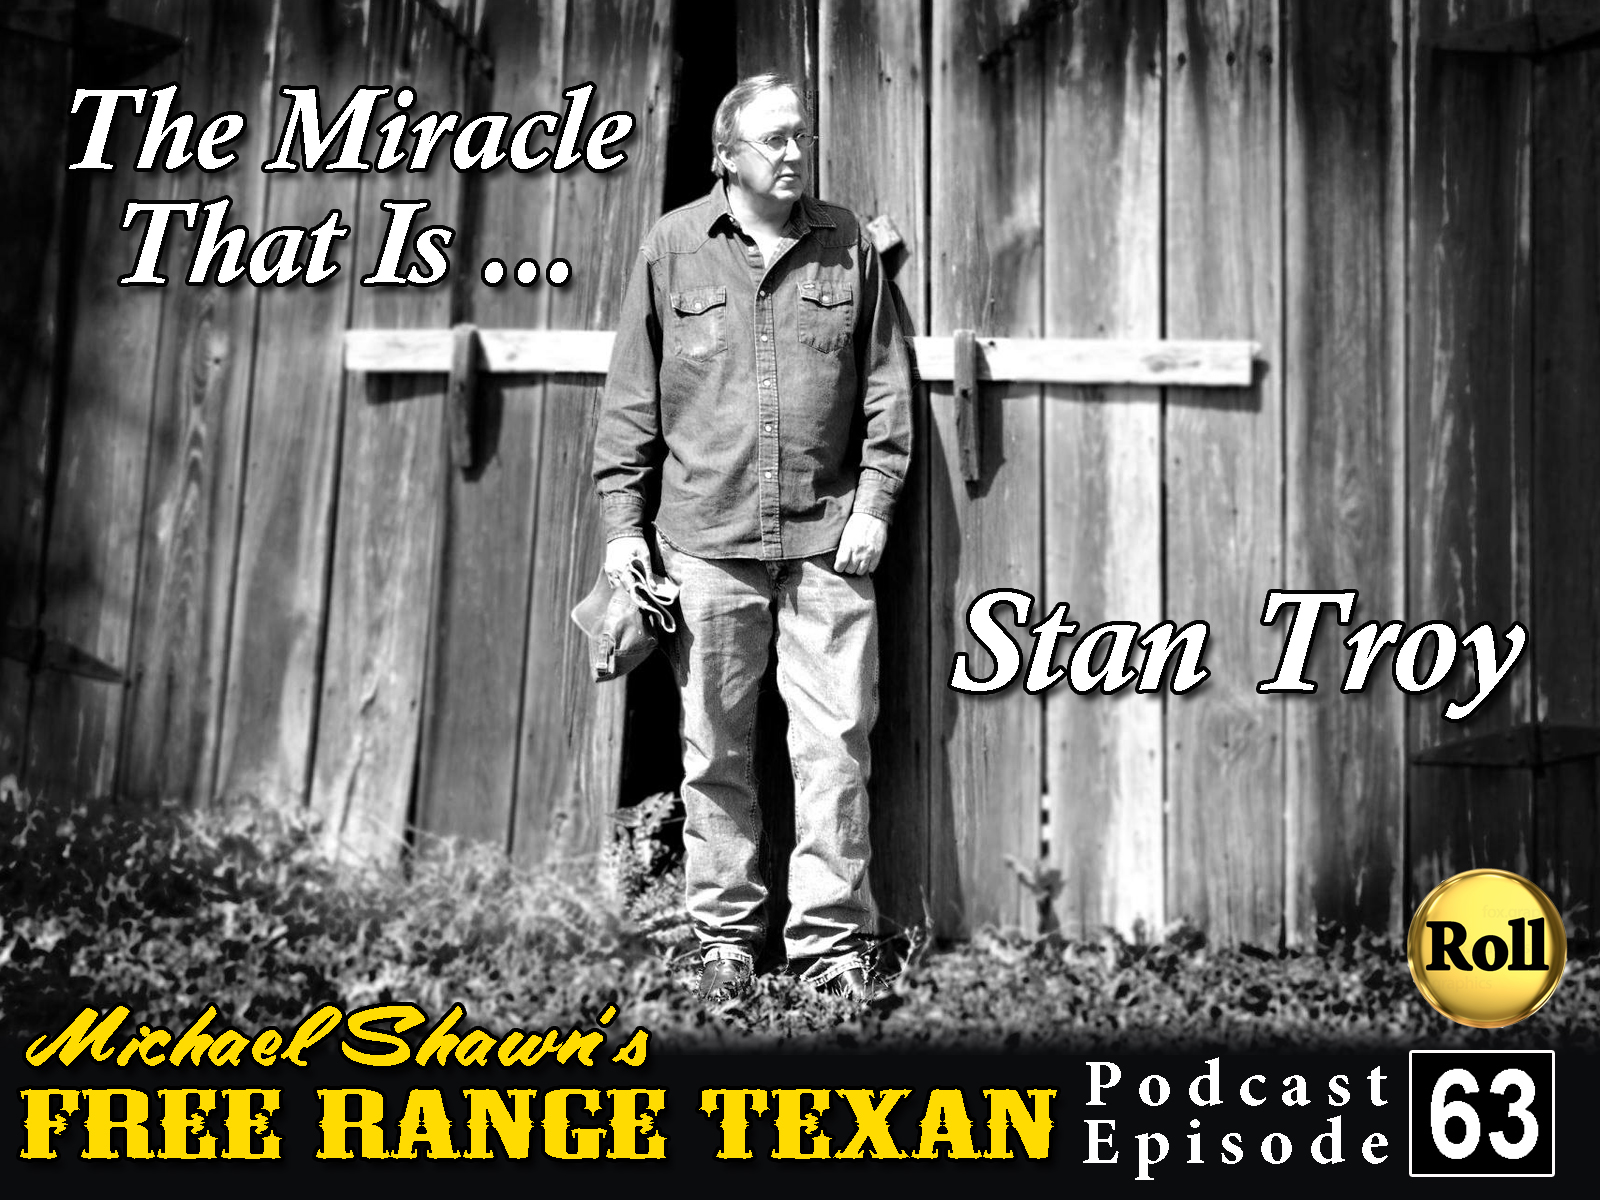 Free Range Texan Podcast Episode 63 Stan Troy